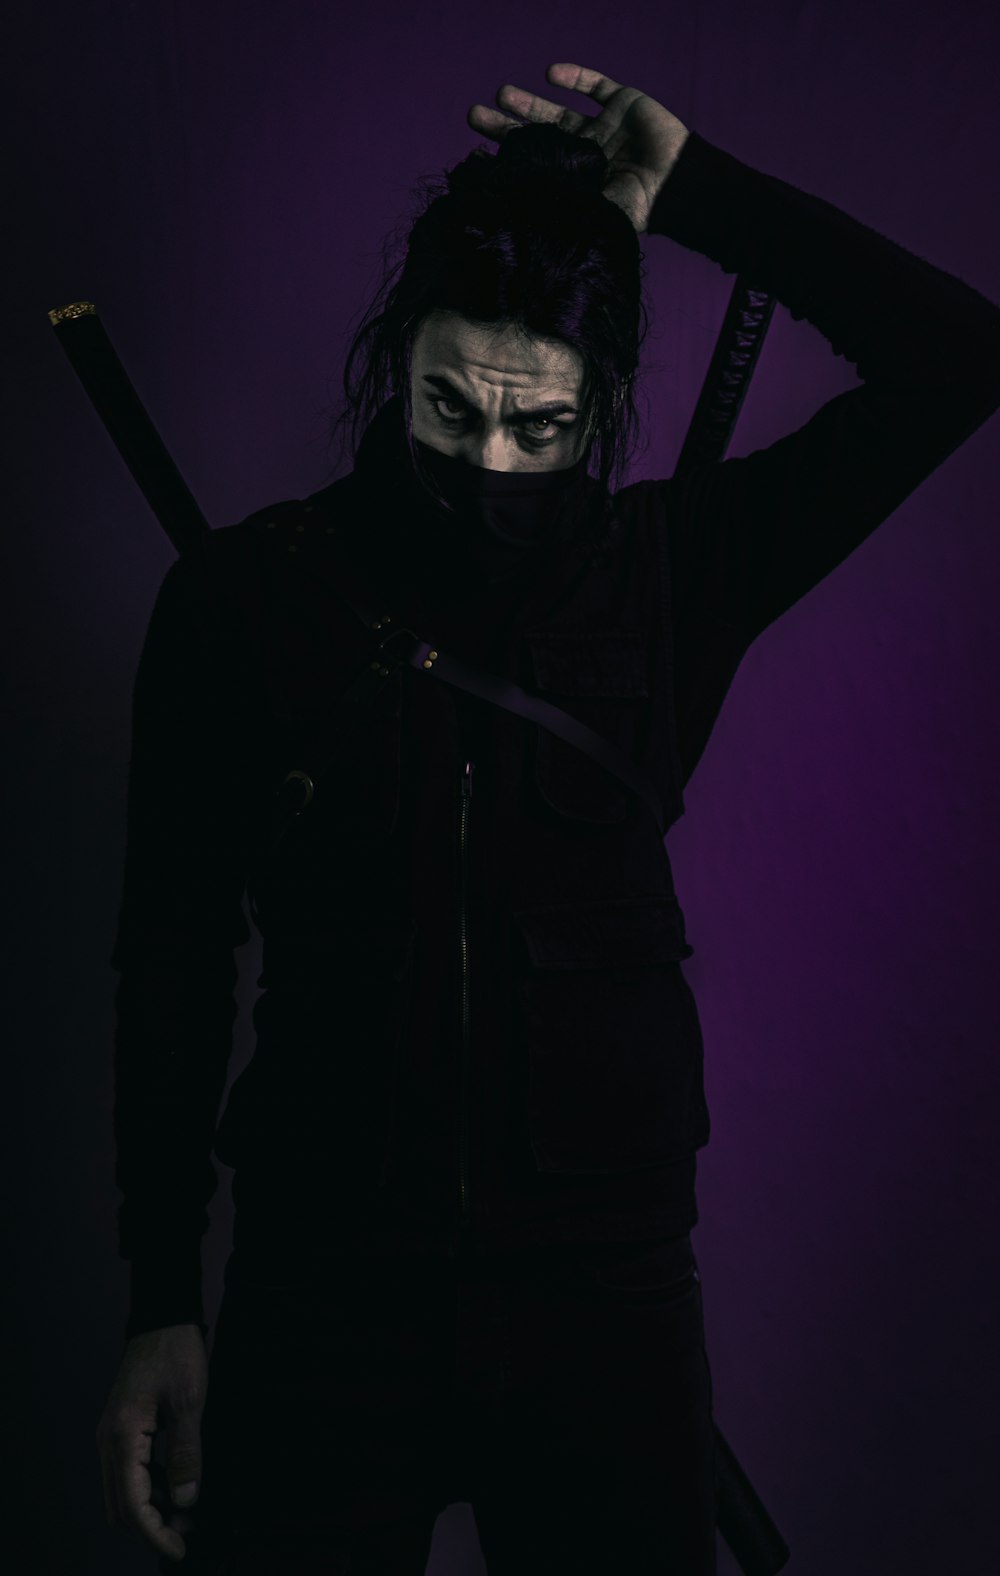 man in black jacket holding black stick